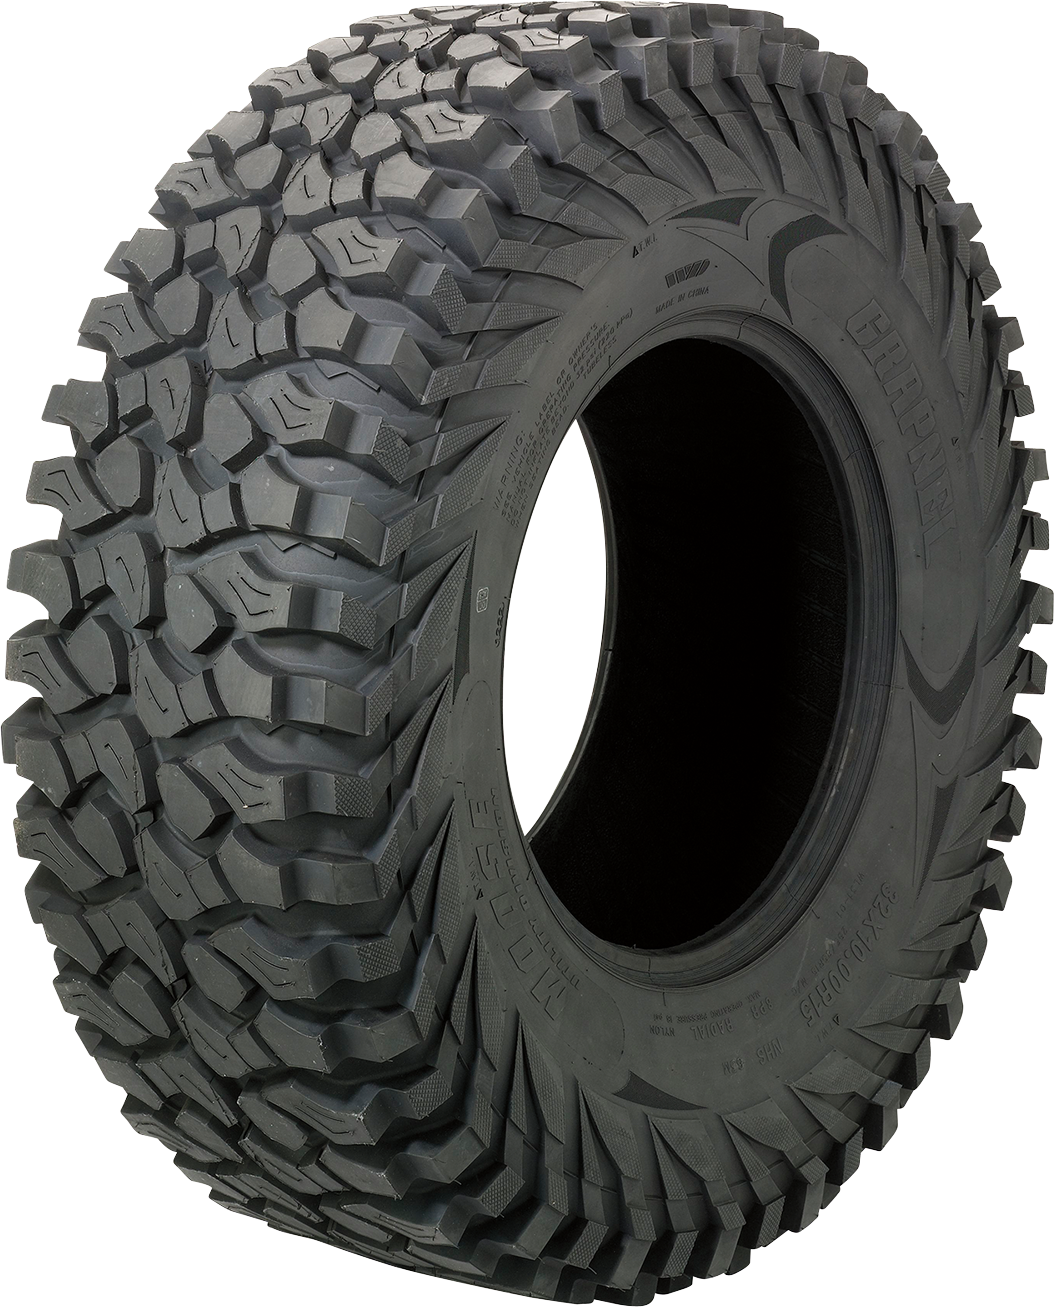 MOOSE UTILITY Tire - Grapnel - Front/Rear - 32x10R15 - 8 Ply WVSWL31321015R8